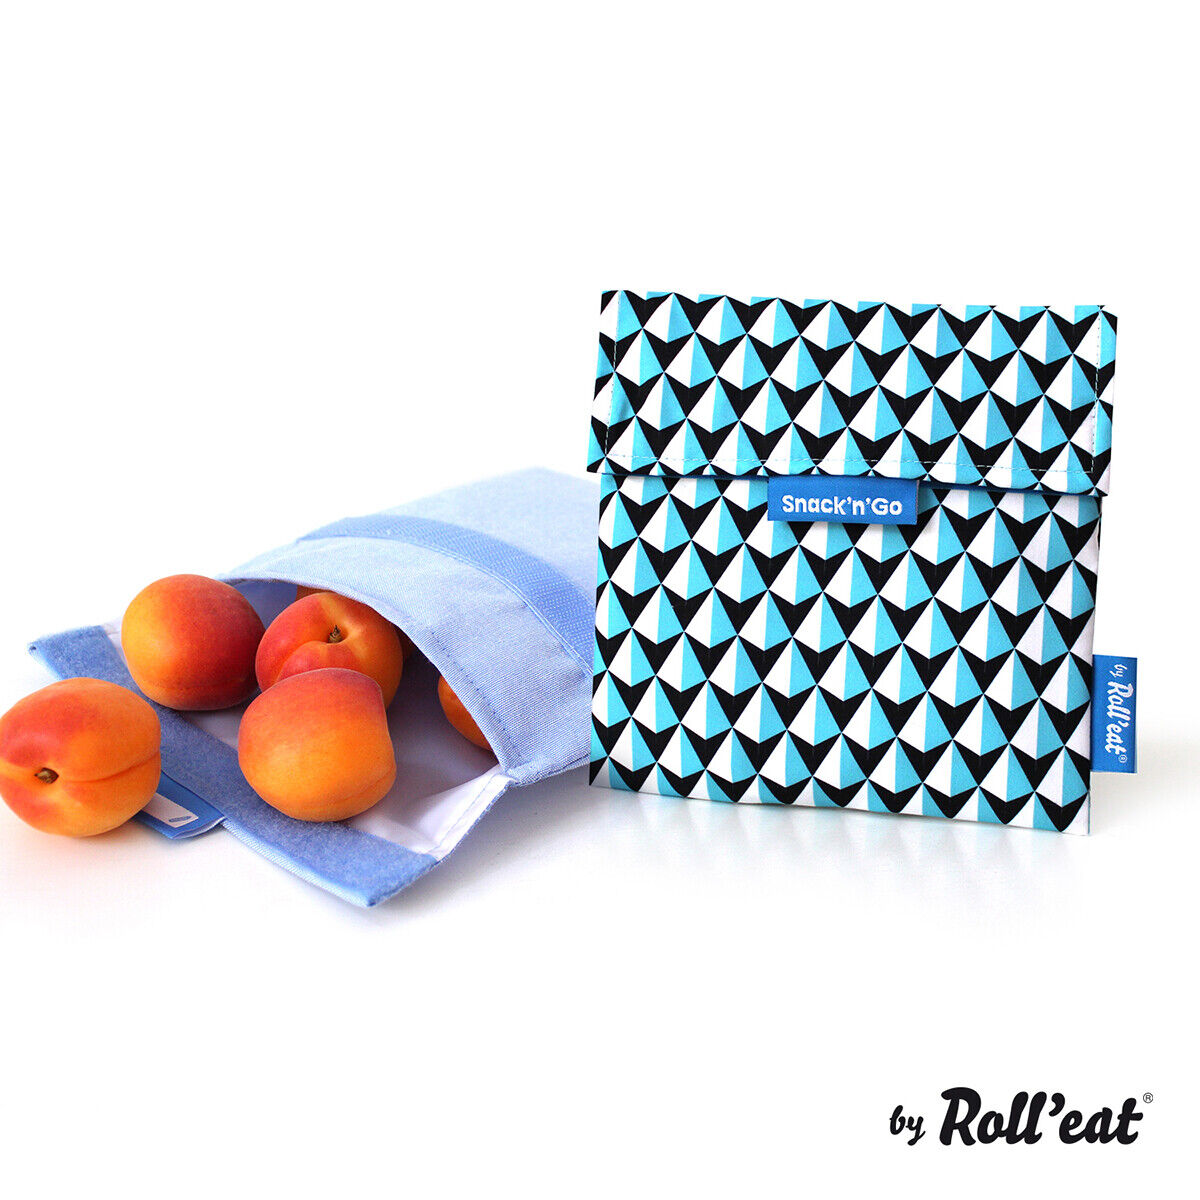 Roll'eat - Snack'n'Go Tiles -Reusable Ecological Sandwich Bag